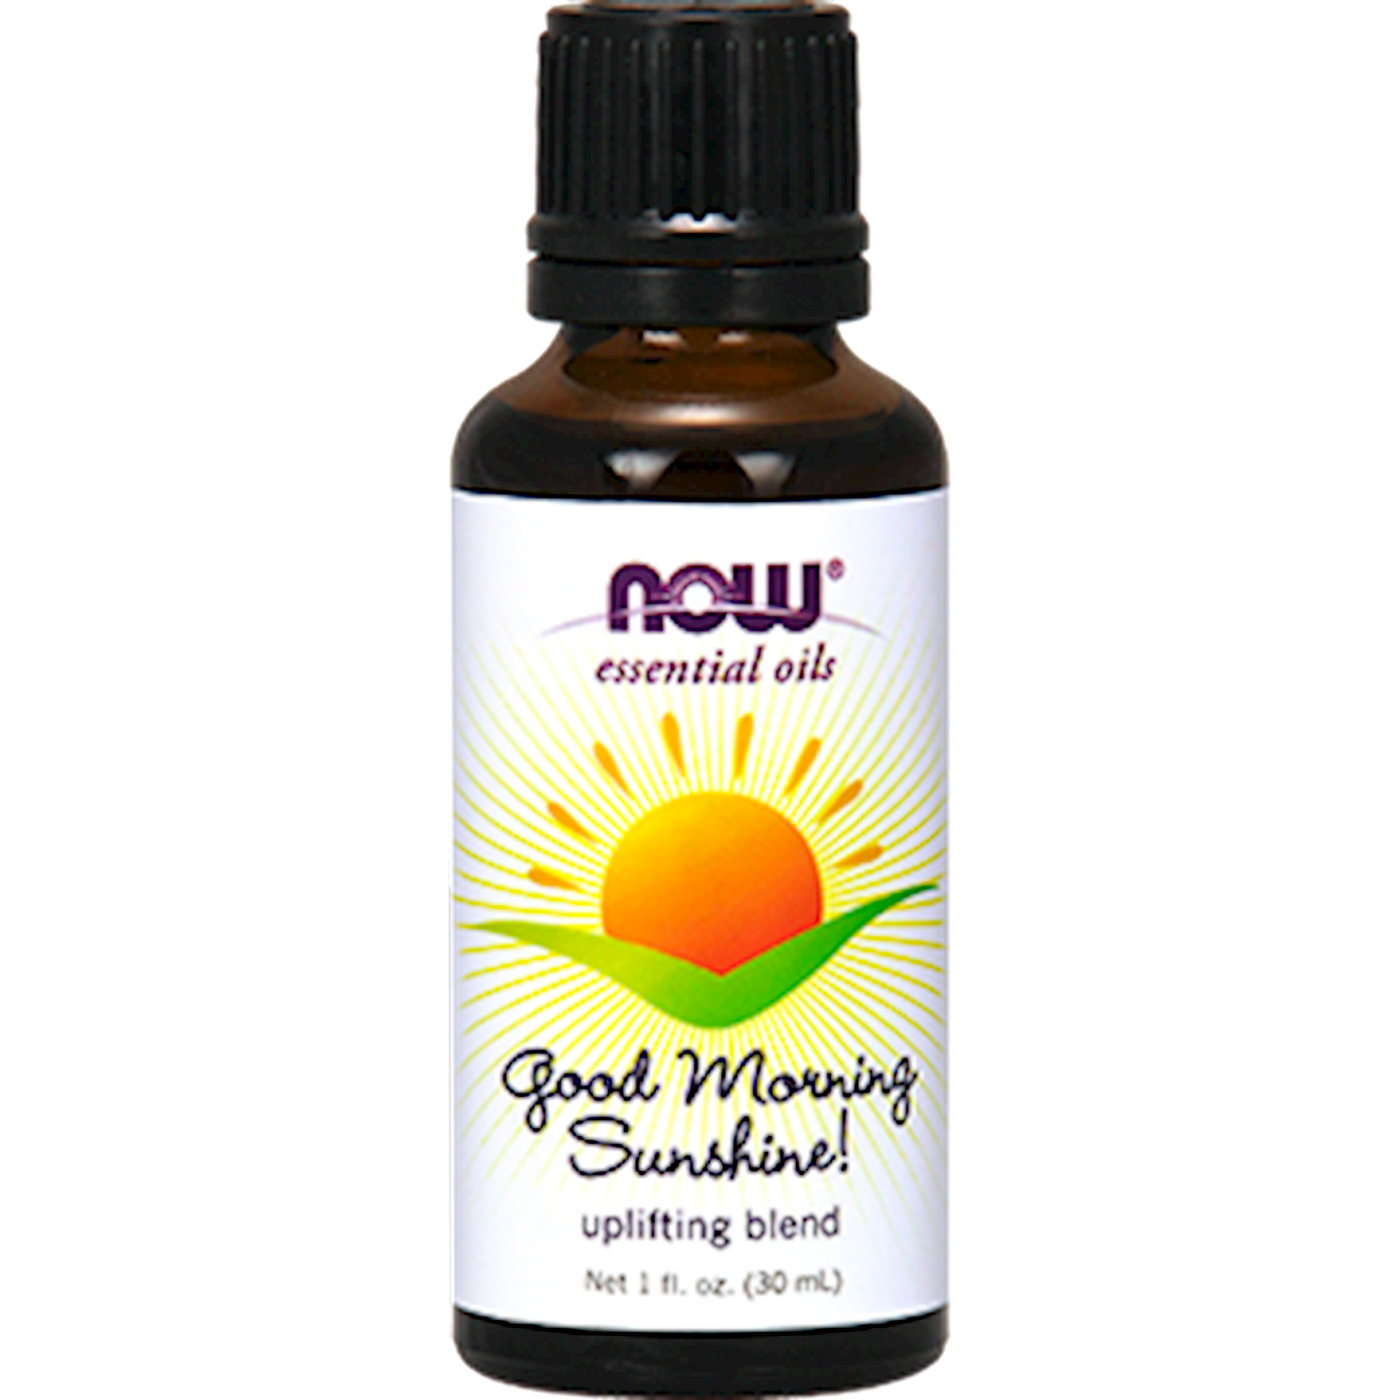 Good Morning Sunshine Oil Blend 1 fl oz Curated Wellness